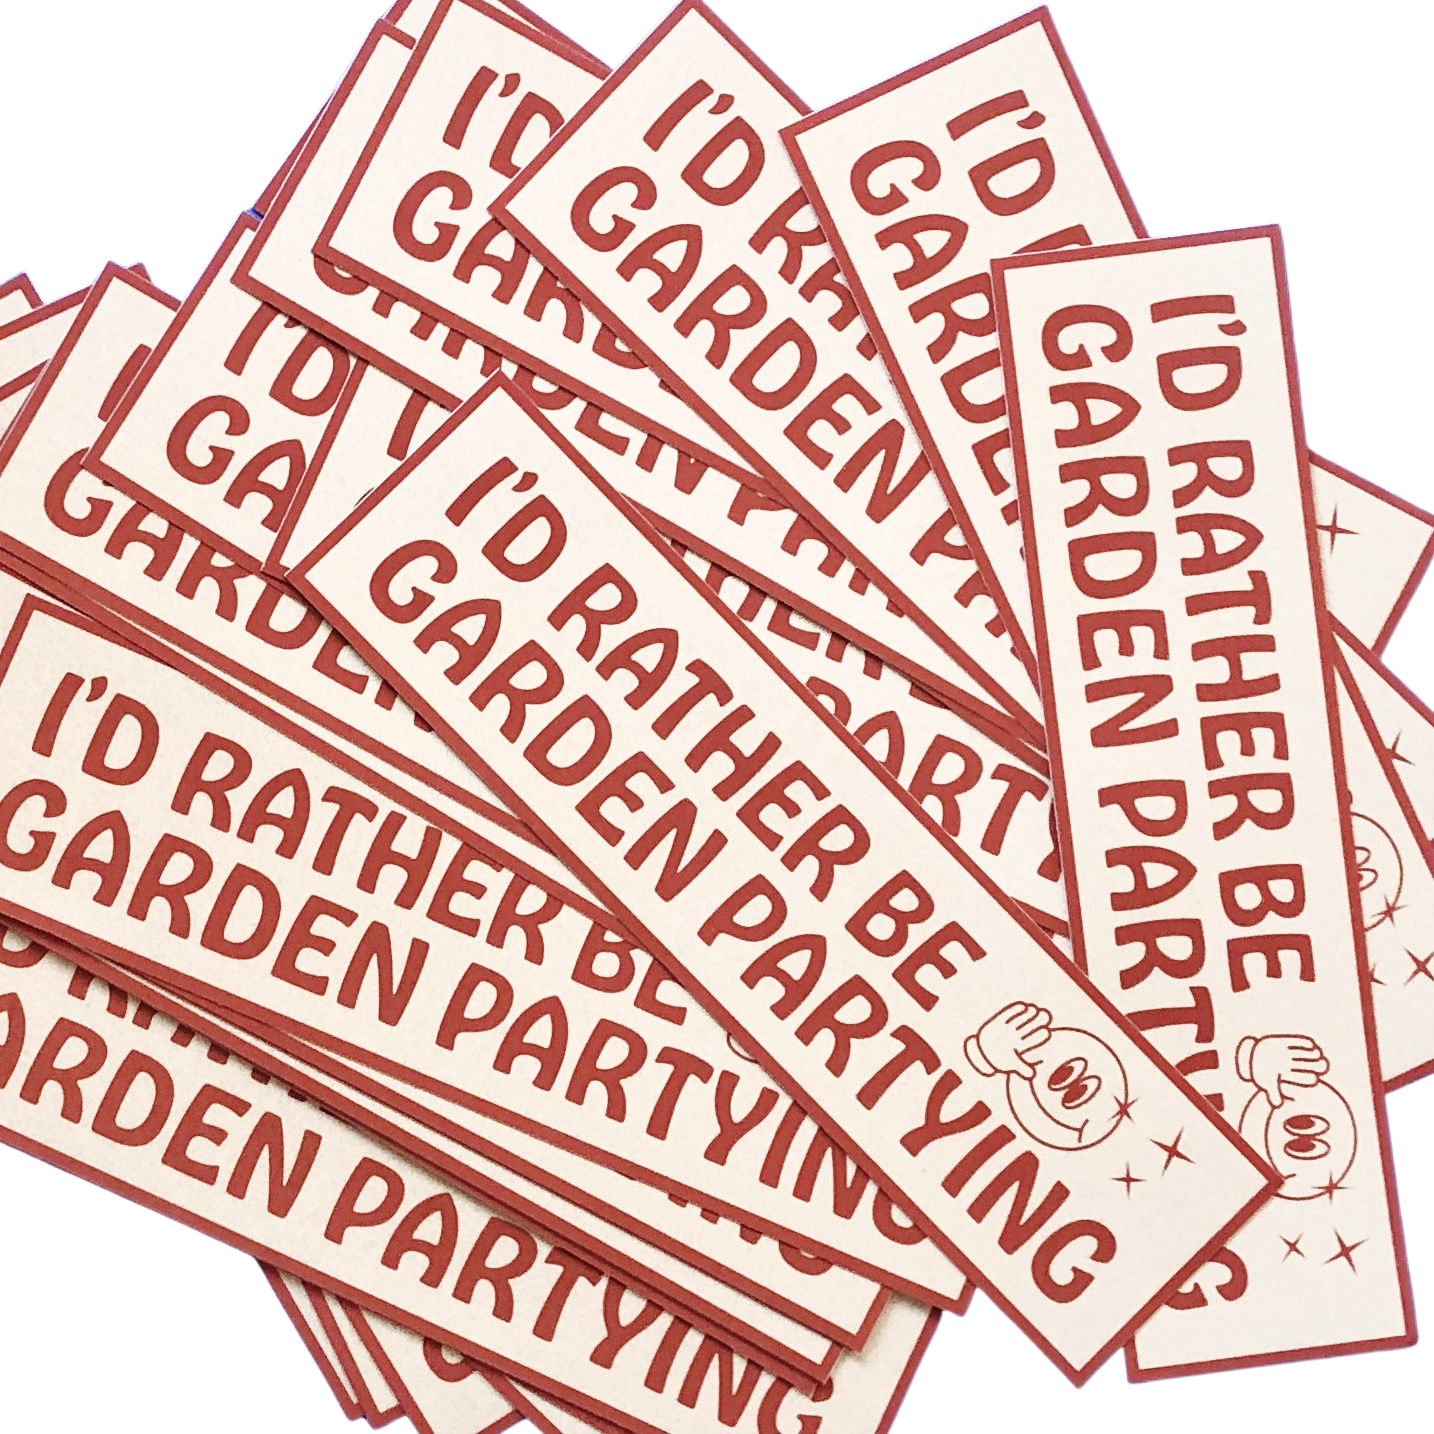 I'd Rather Be Garden Partying Bumper Sticker